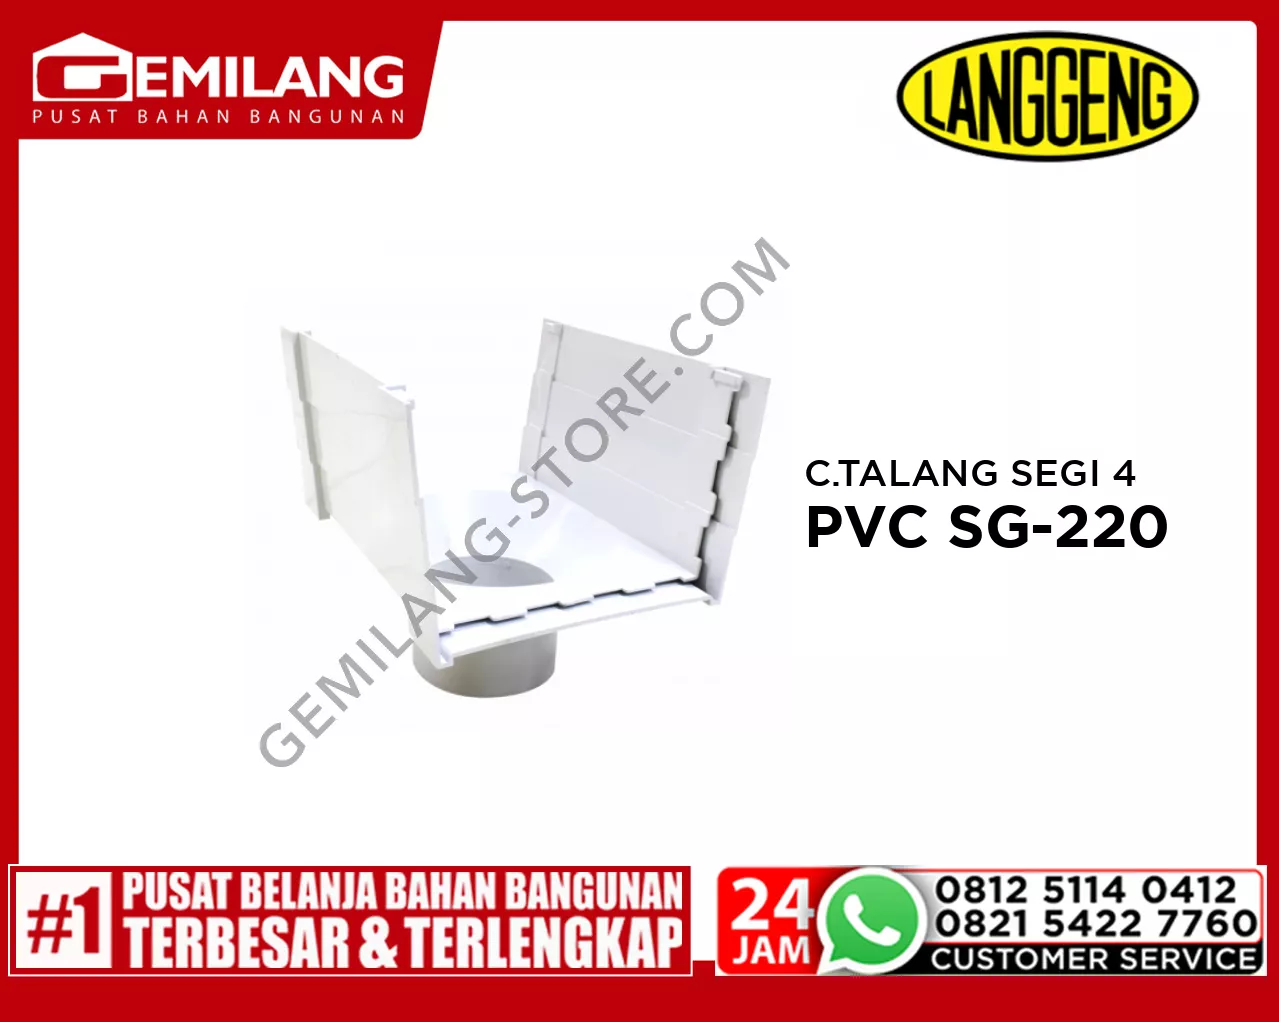 LANGGENG CORONG TALANG SEGIEMPAT PVC SG-220